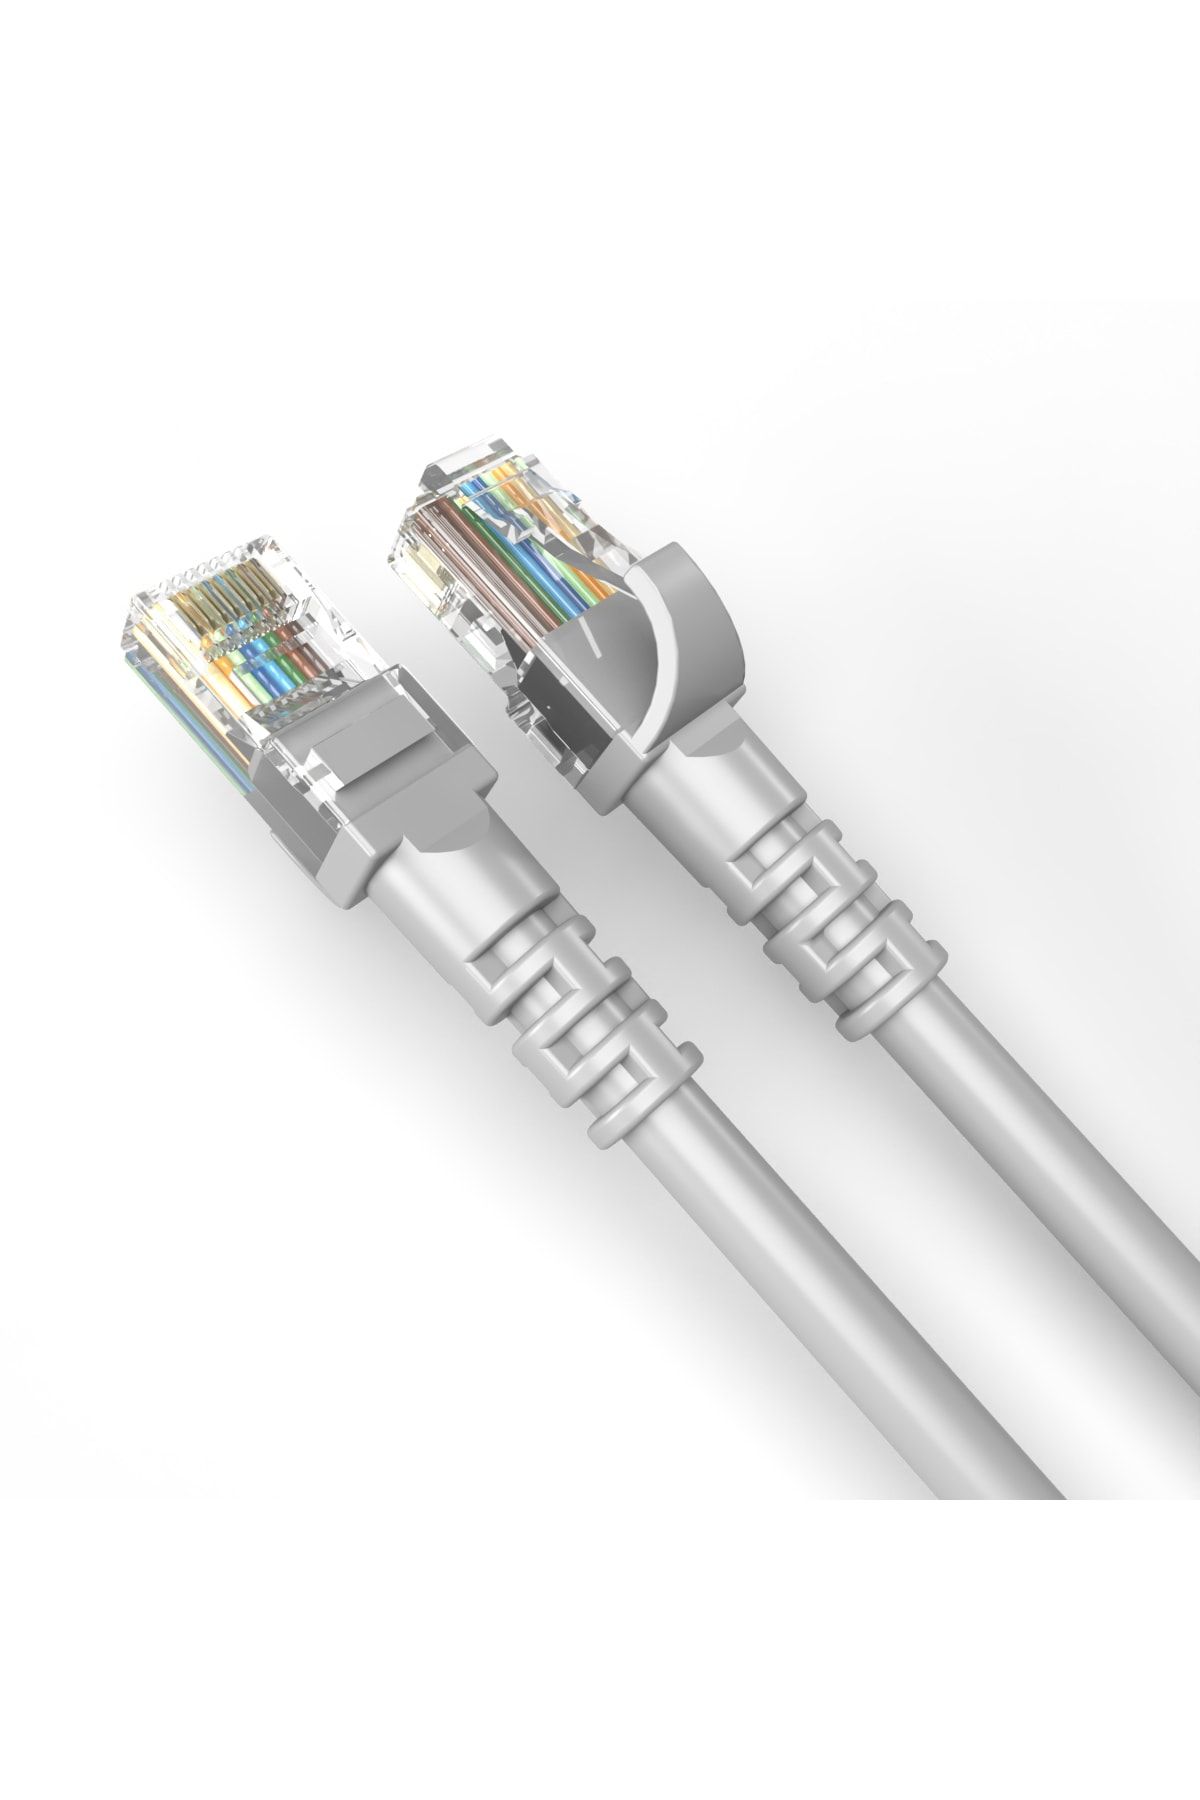 DERKAB 3 Metre Cat6 Network-Ağ-Ethernet Kablosu Gri